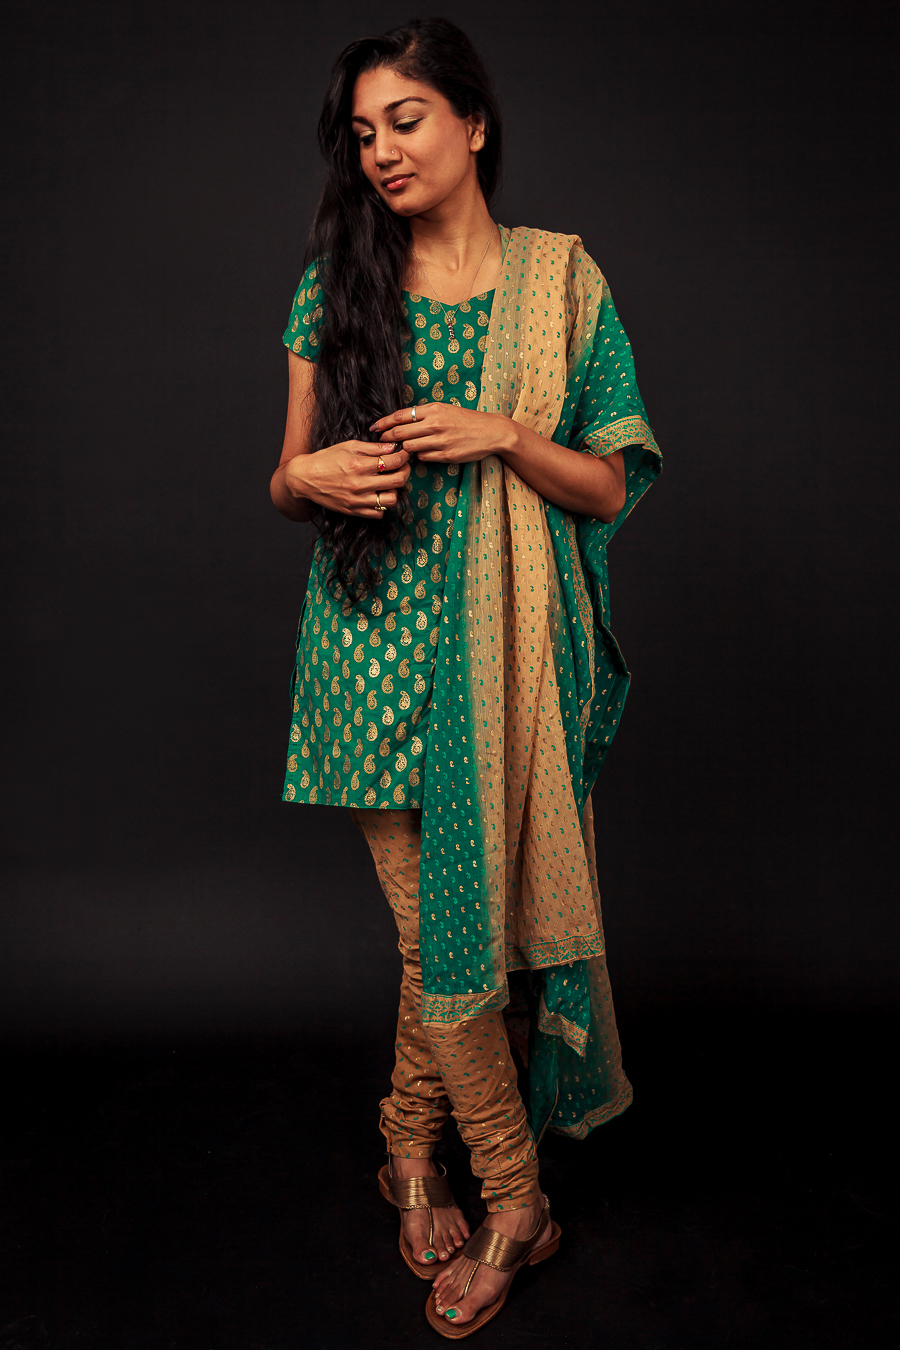 Ram_Annamali_Thennaapan_fashion_photography_Traditional_Indian_costume_green_gold_sandals_saree